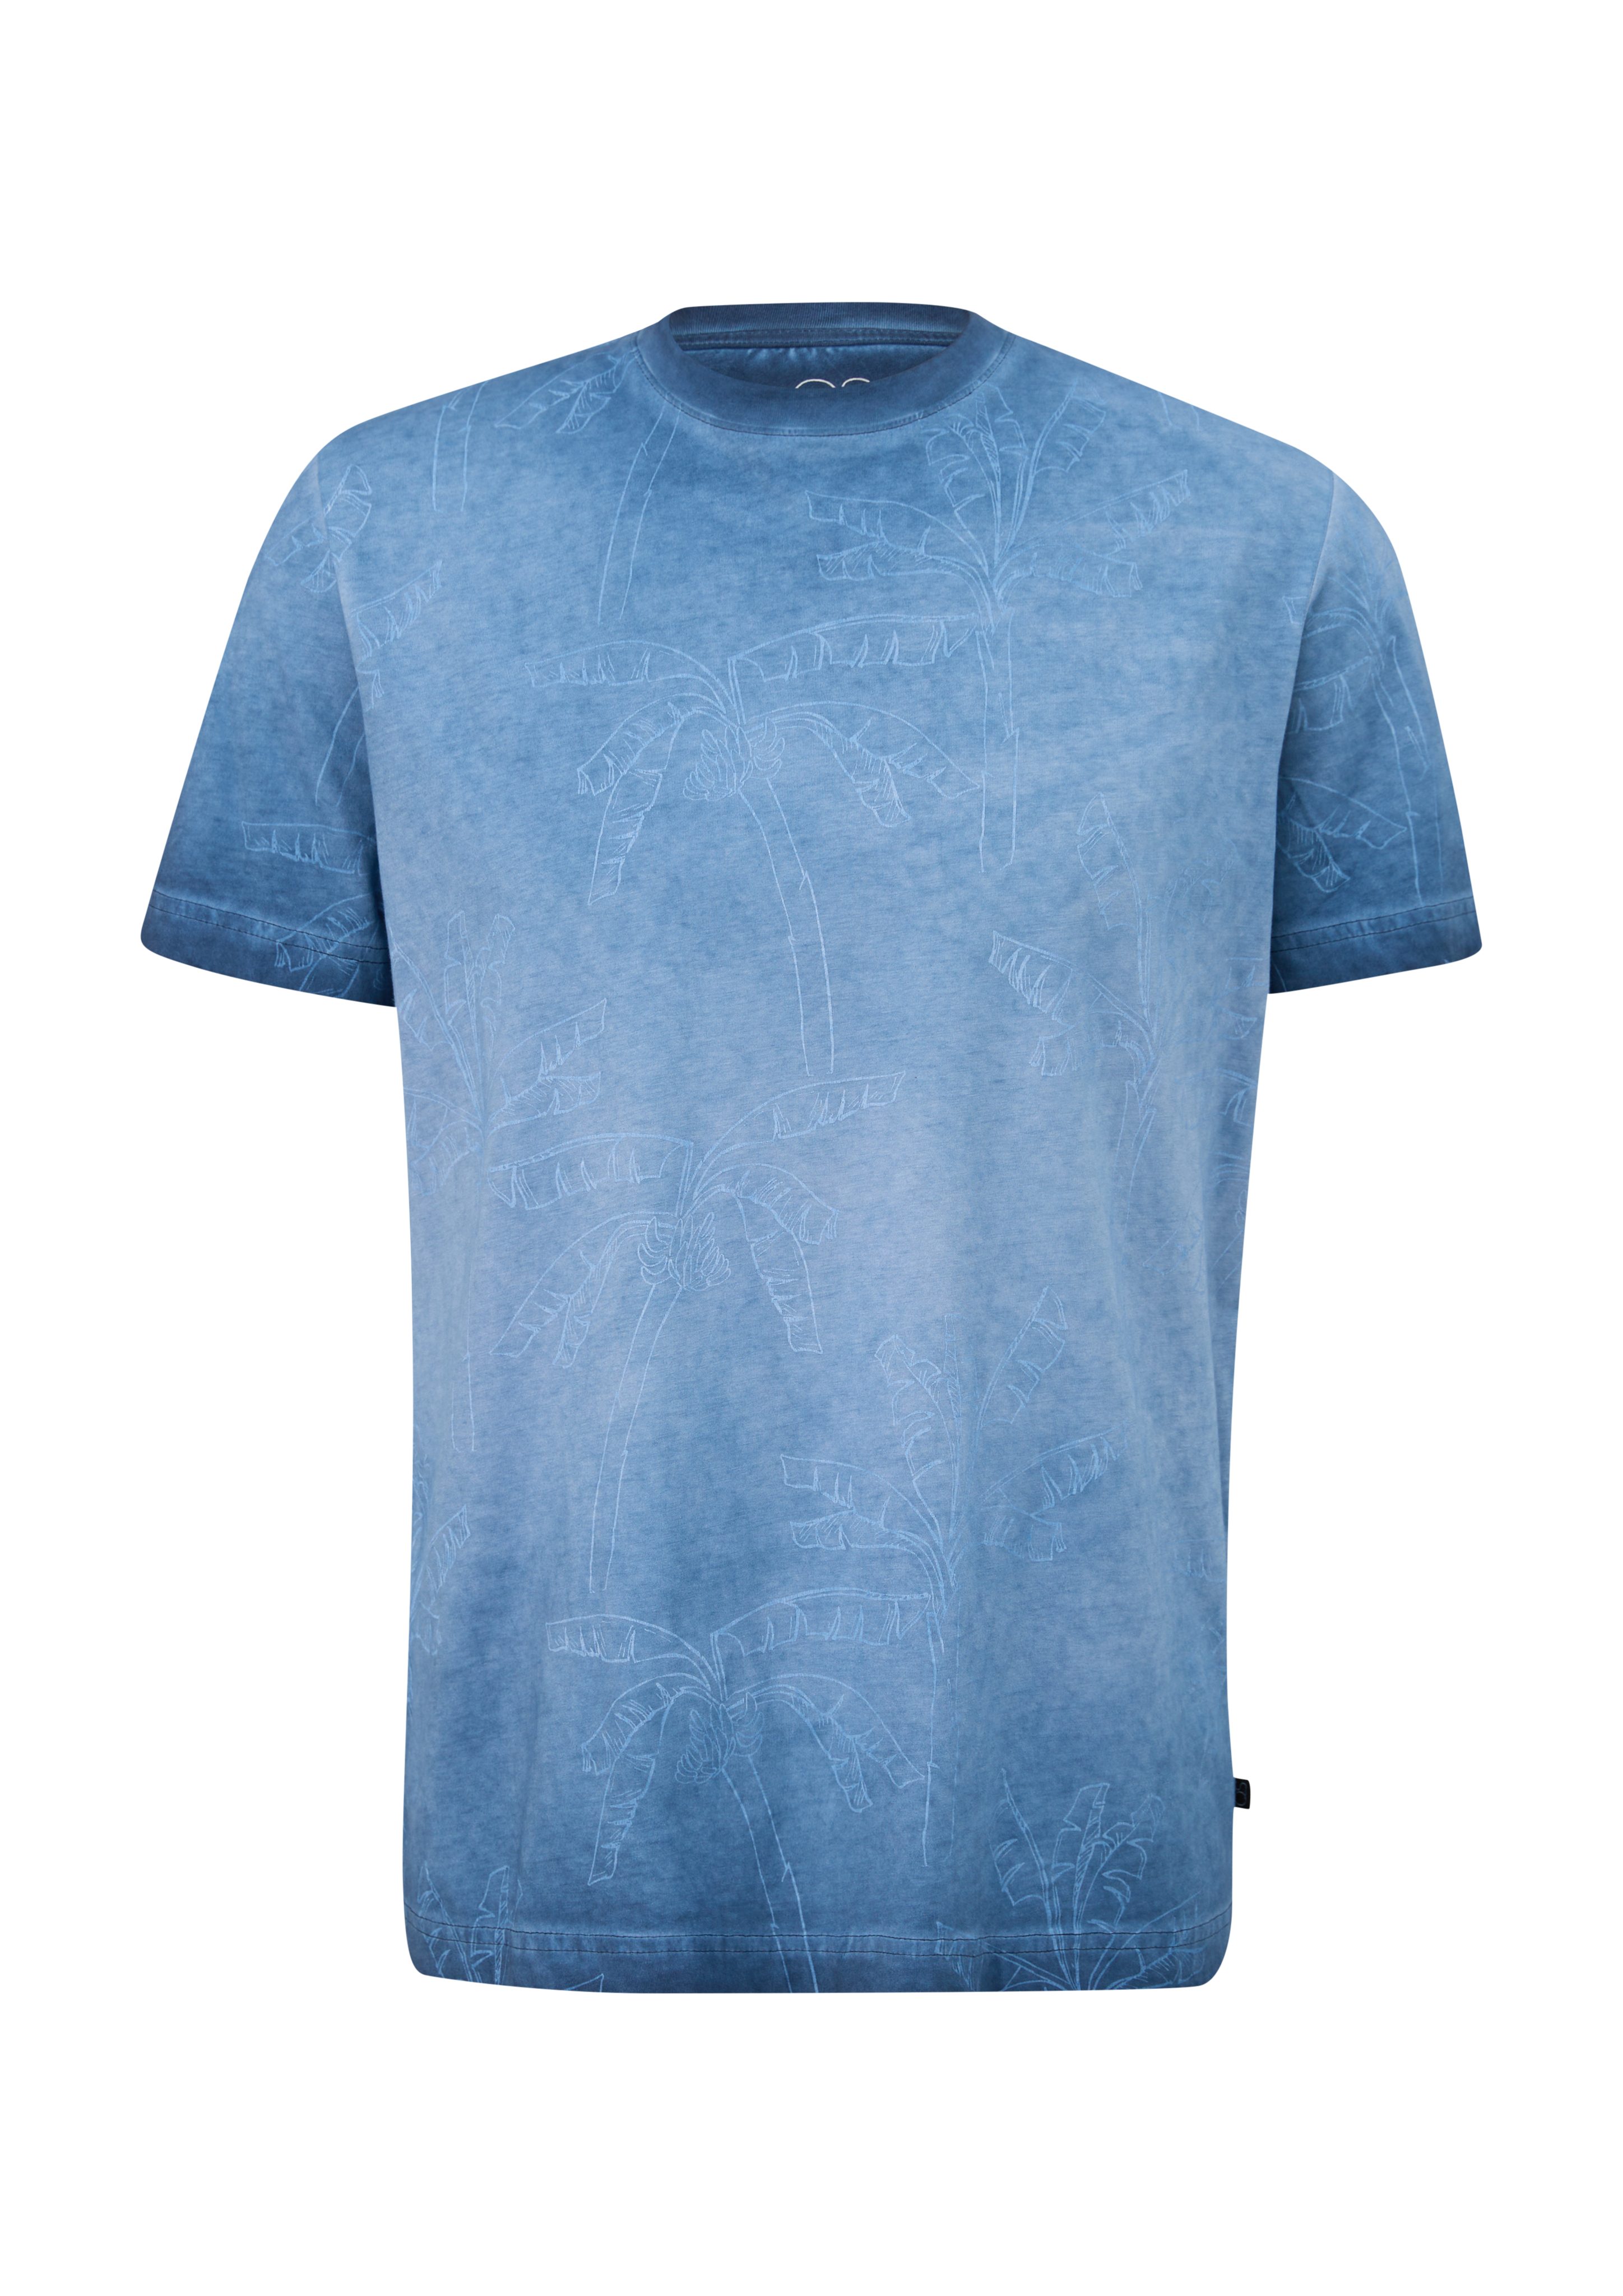 QS Kurzarmshirt T-Shirt reiner aus tiefblau Baumwolle